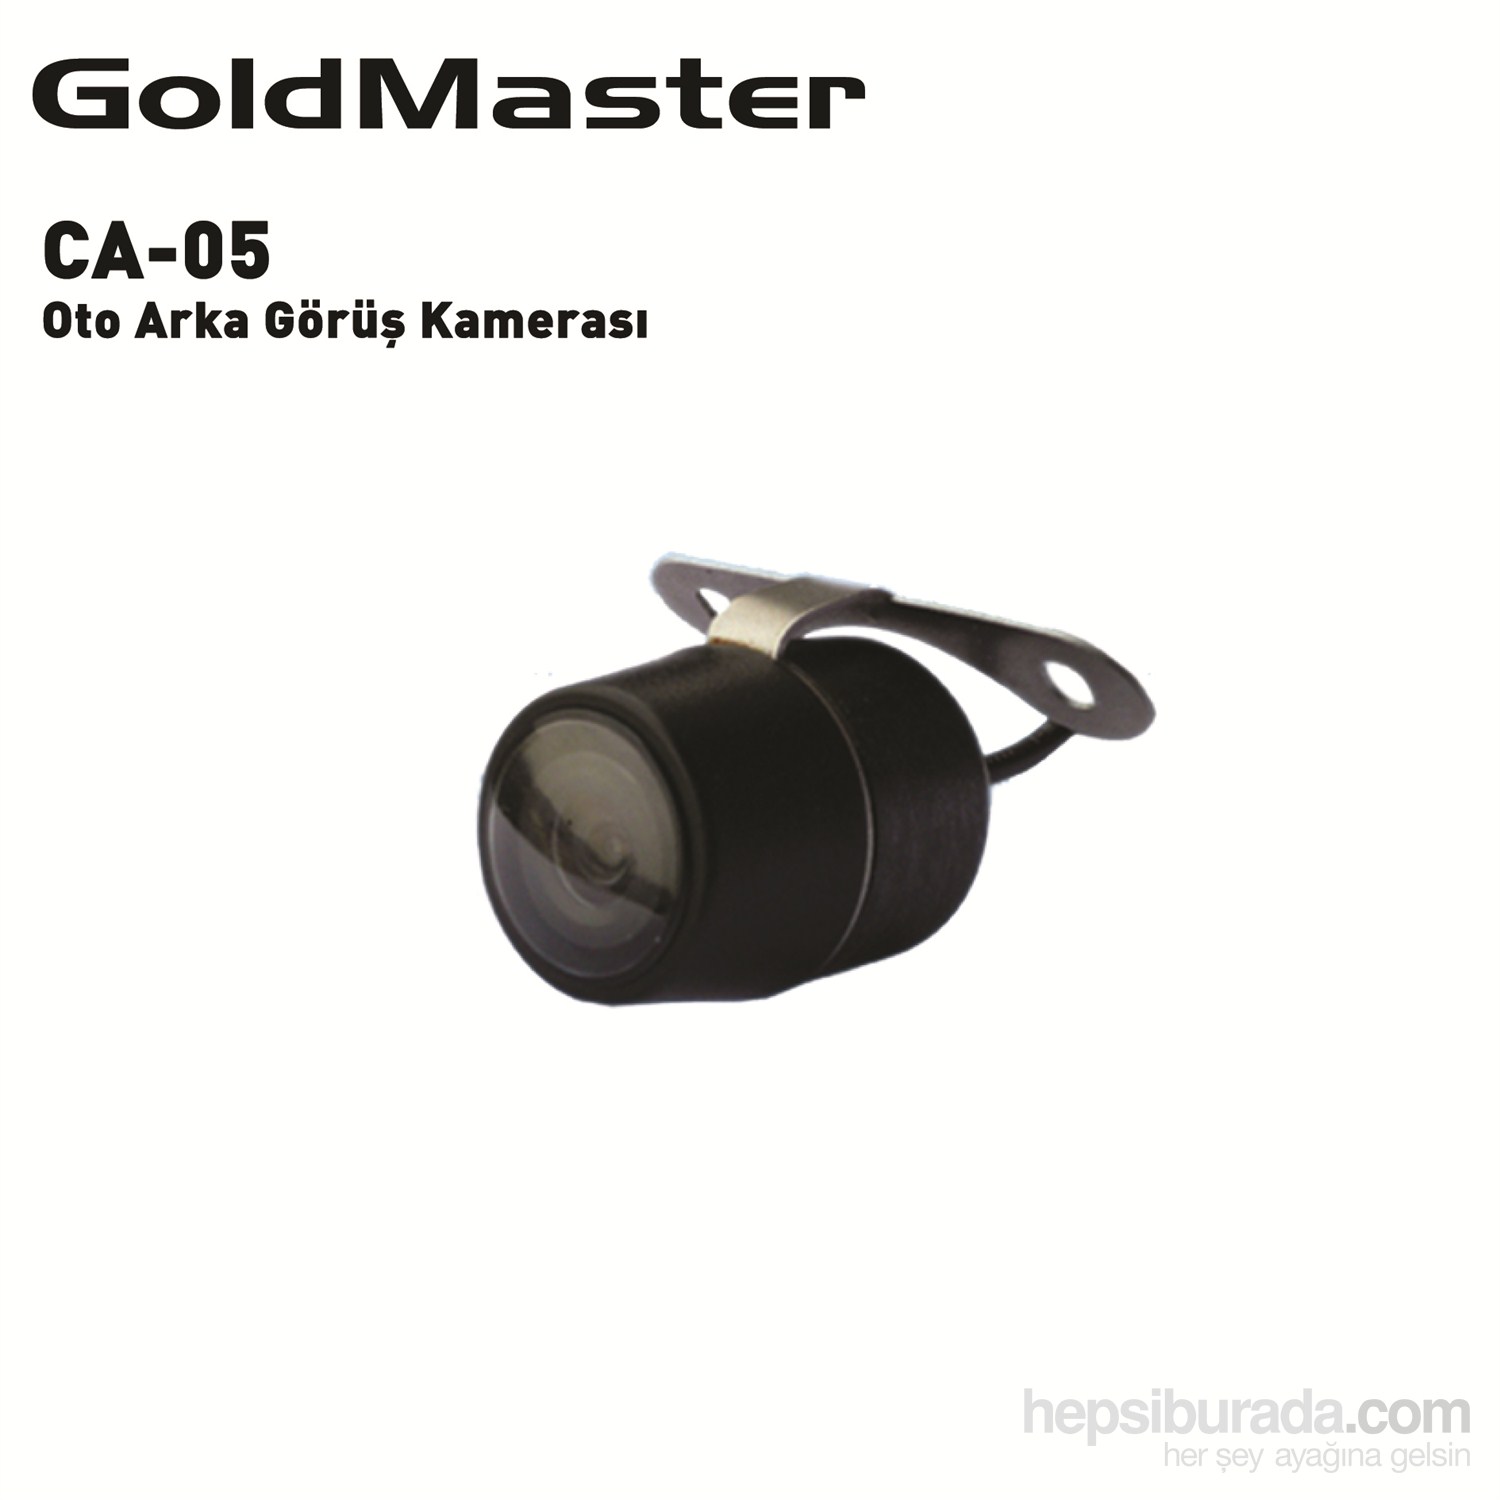 Goldmaster CA-05 Arka Görüş Kamerası